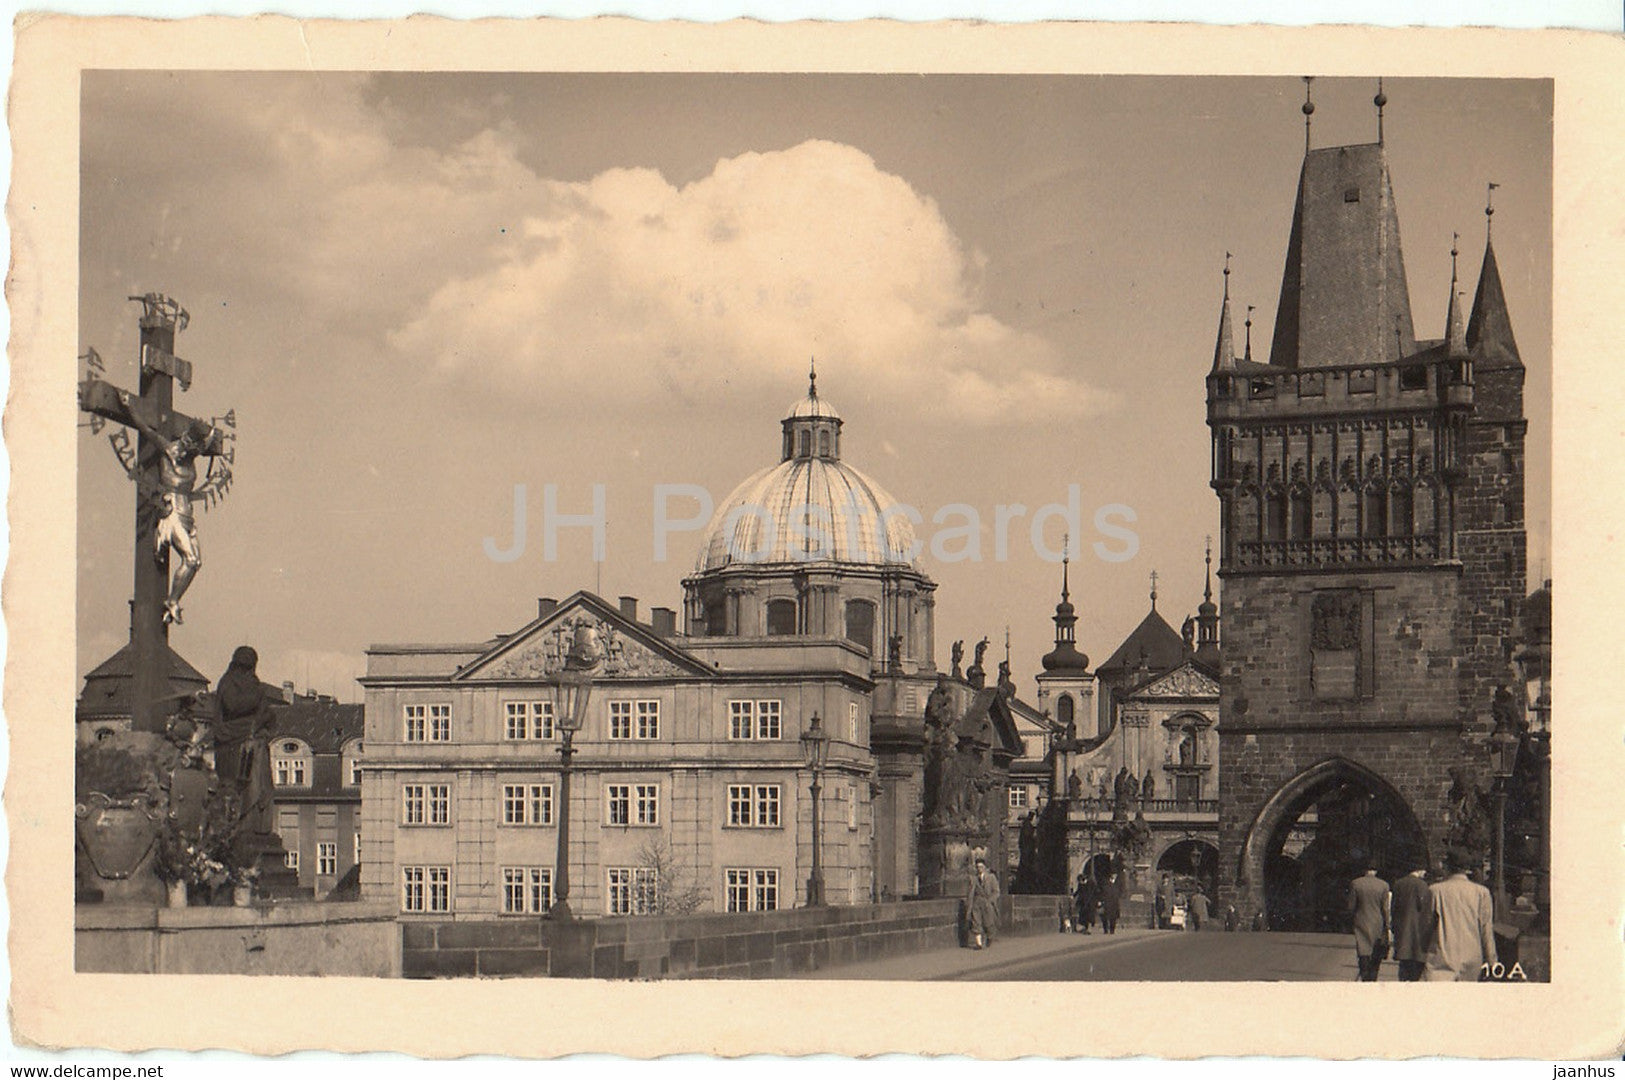 Praha - Prague - U Krizovniku - The Crusaders Monastery - 10A - old postcard - 1940 - Czech Republic - used - JH Postcards